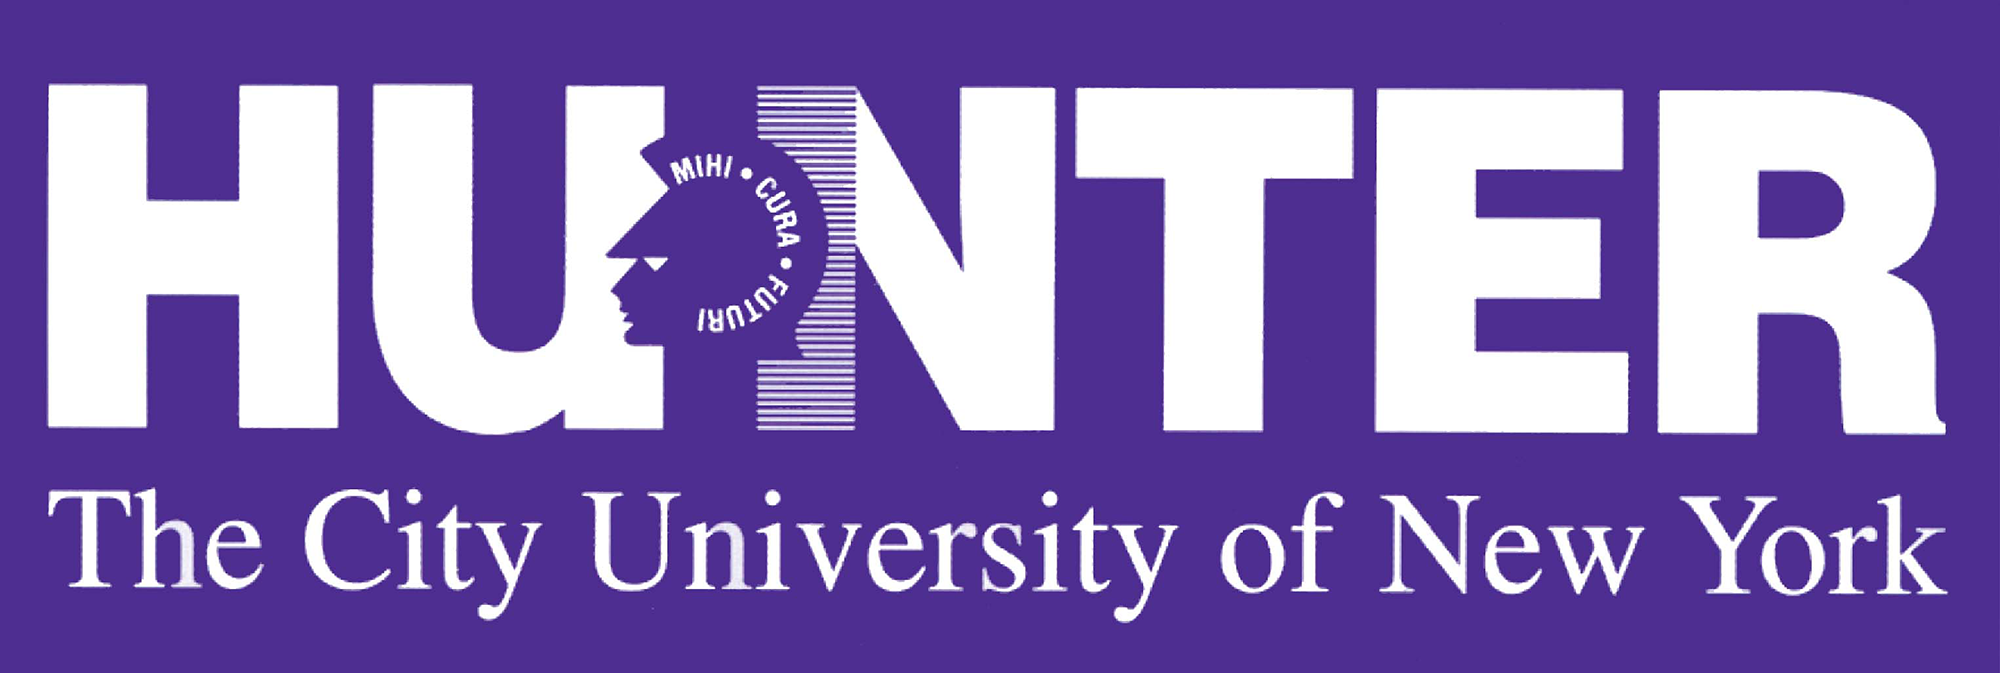 hunter-college-logo.png